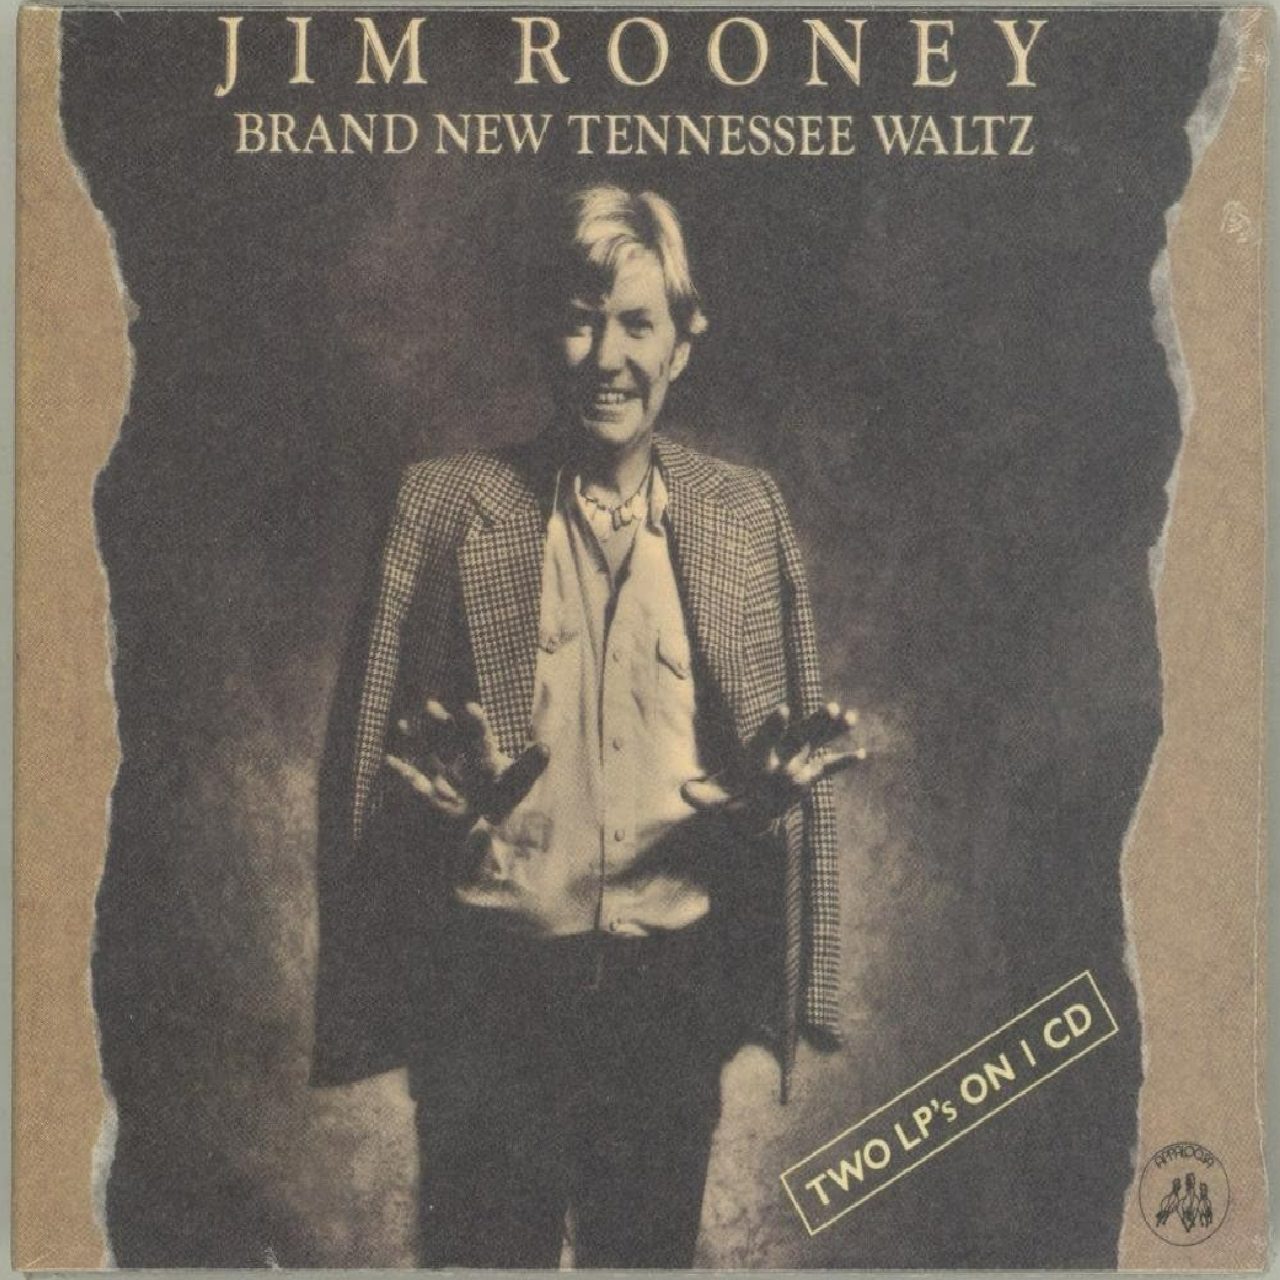 Jim Rooney – Brand New Tennessee Waltz cover album